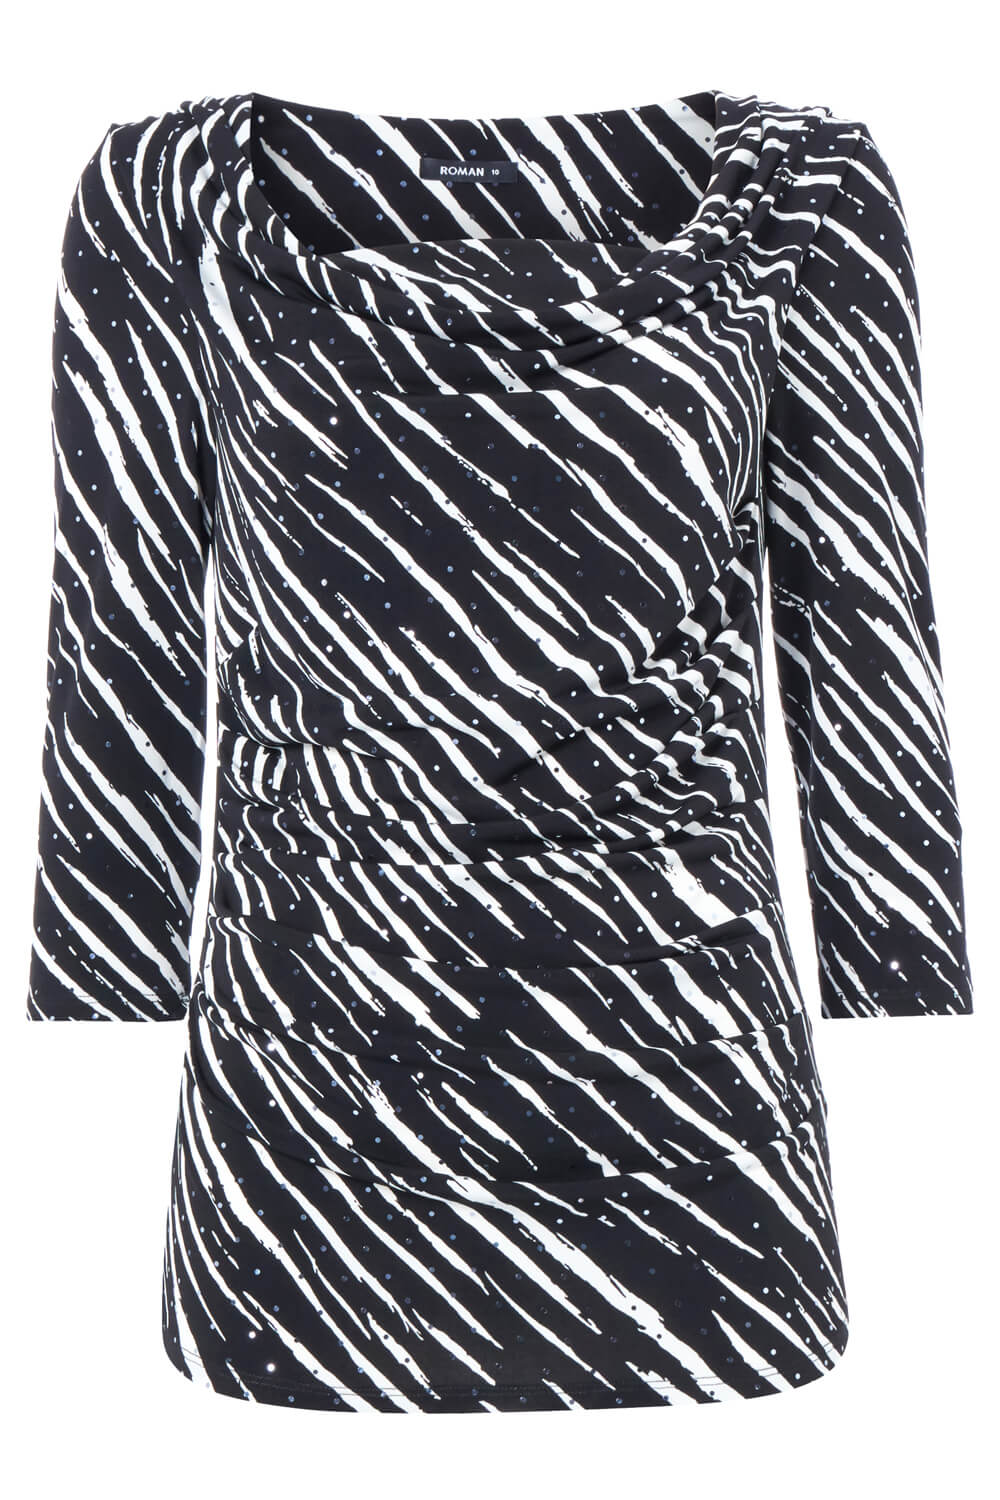 Black Zebra Print Sequin Cowl Neck Top, Image 5 of 5